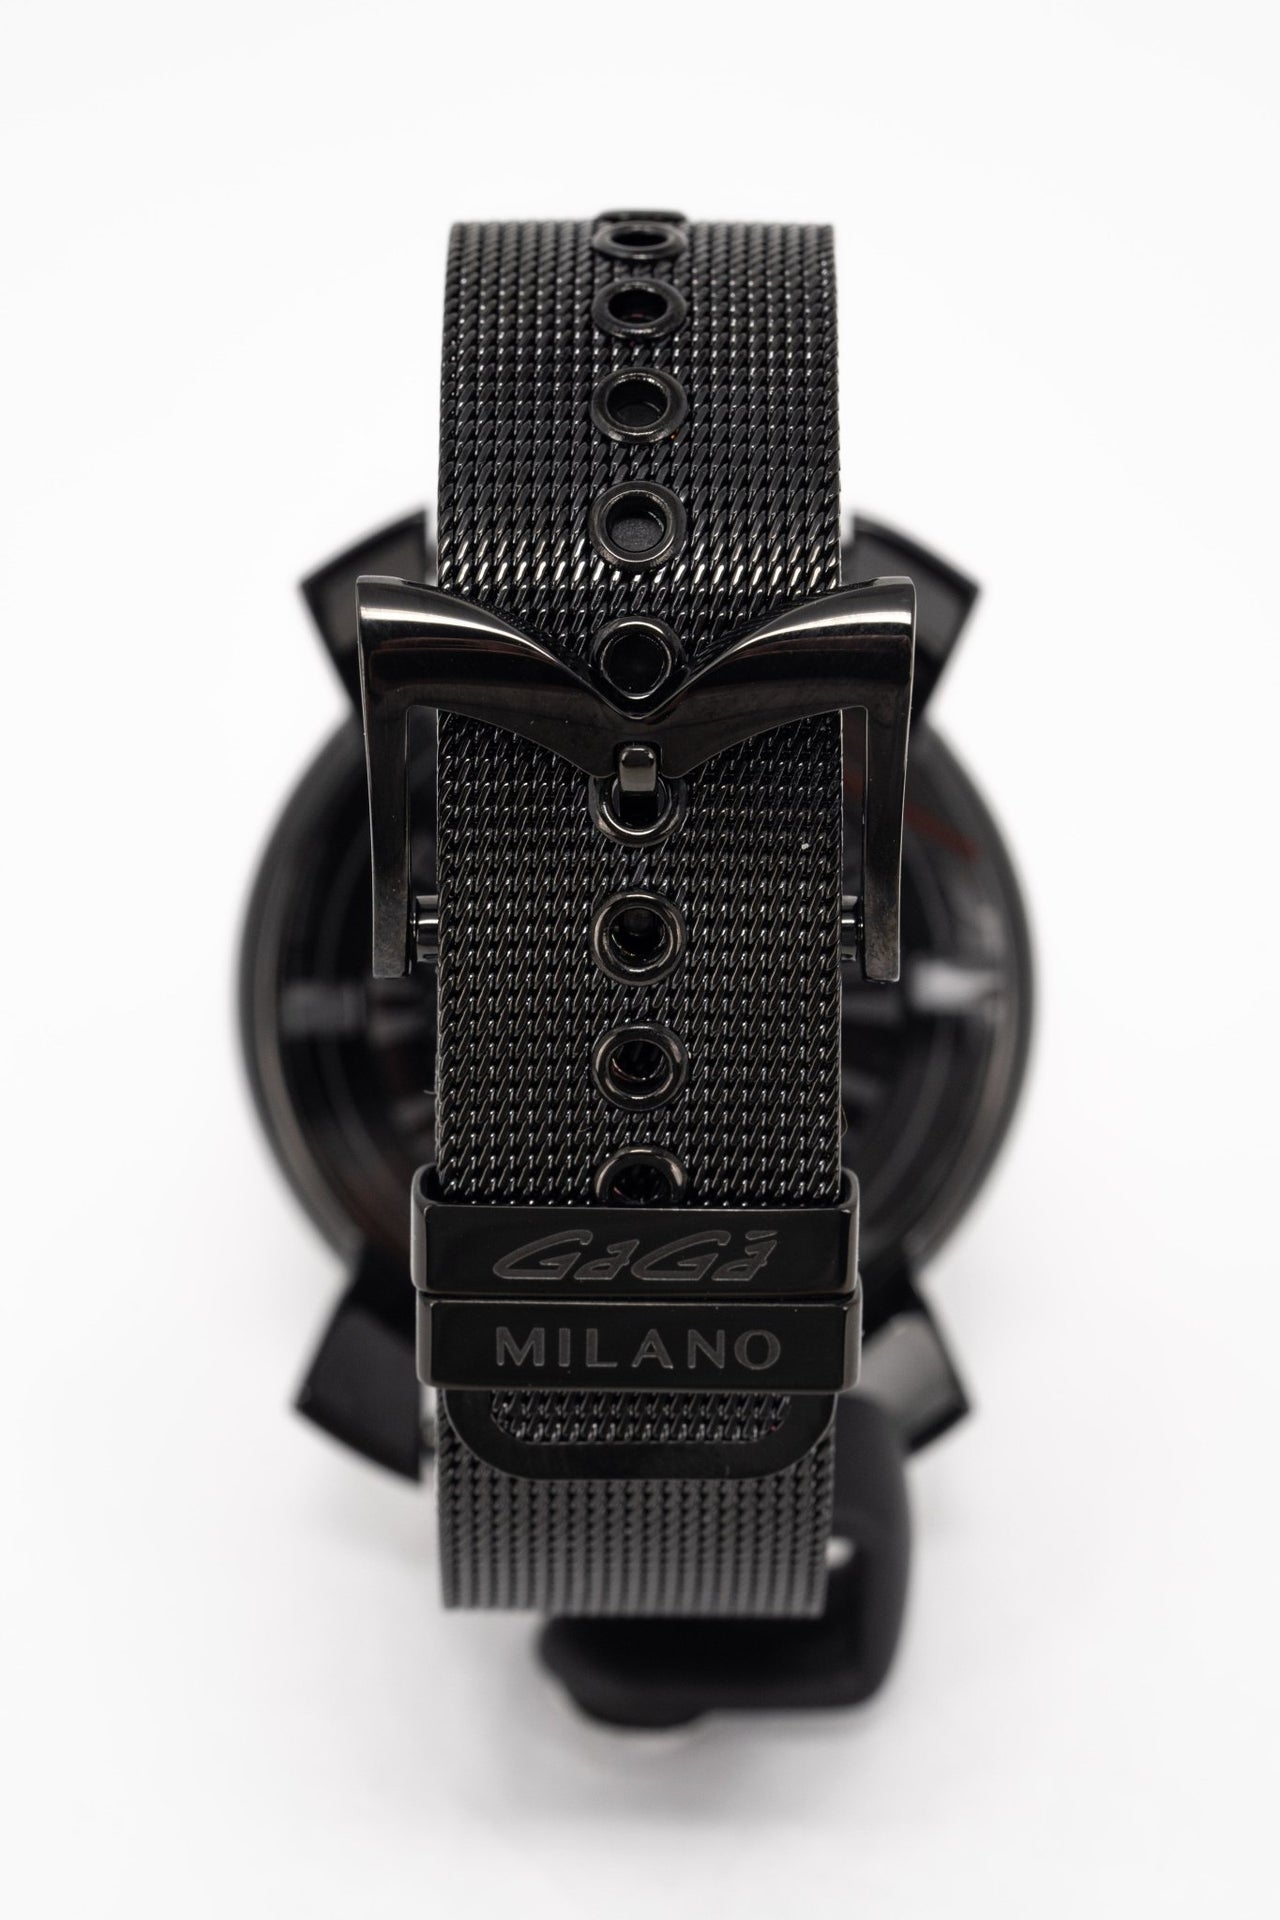 Gaga Milano Watch Slim 46 Black PVD Green Camo - Watches & Crystals